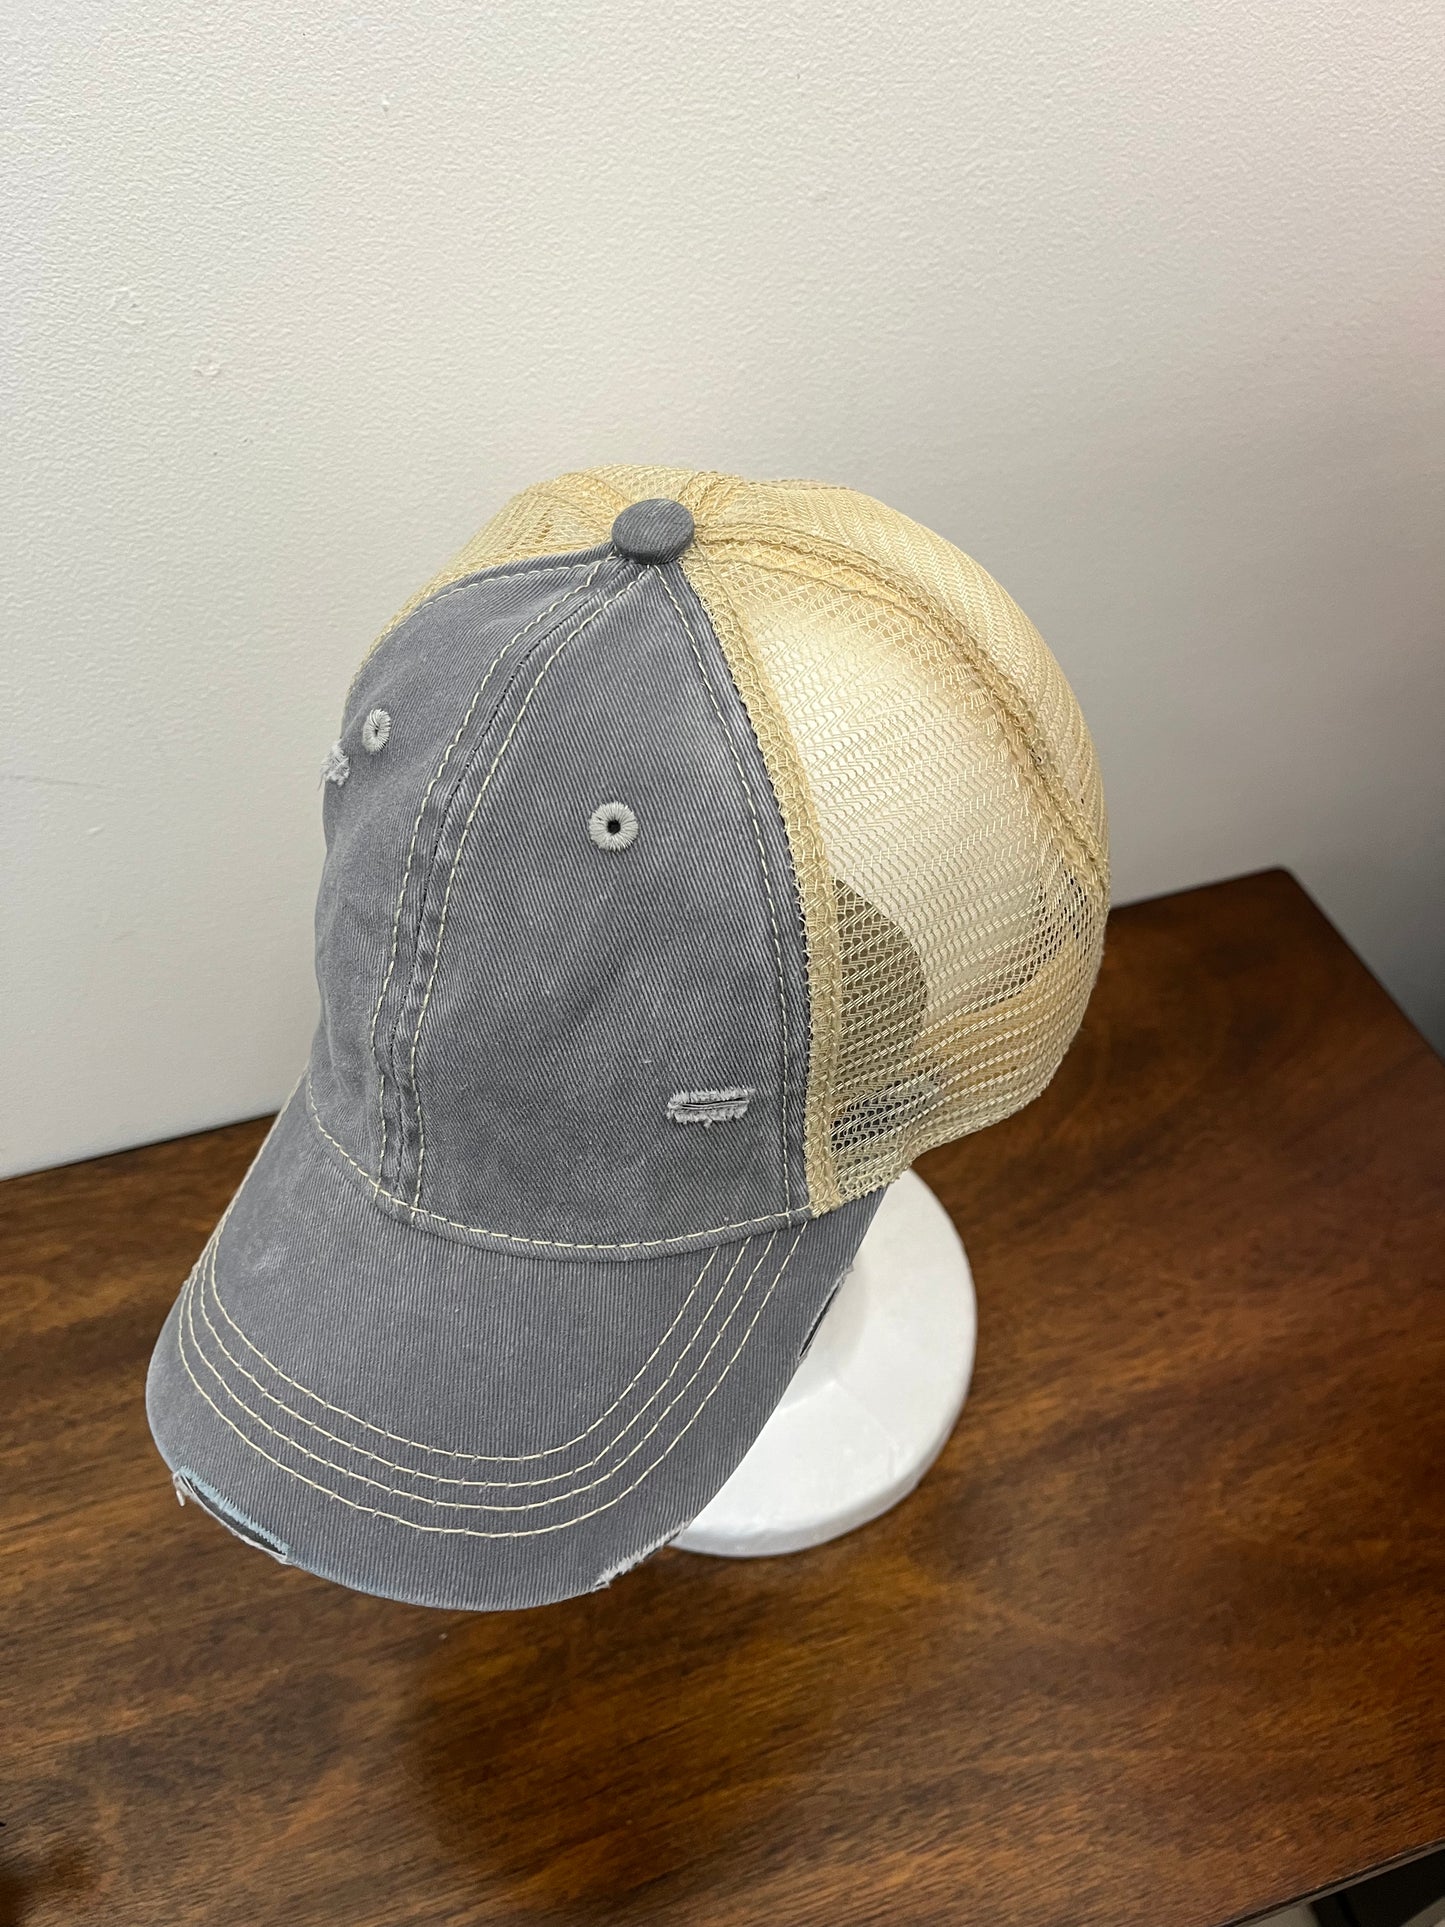 Distressed ball cap